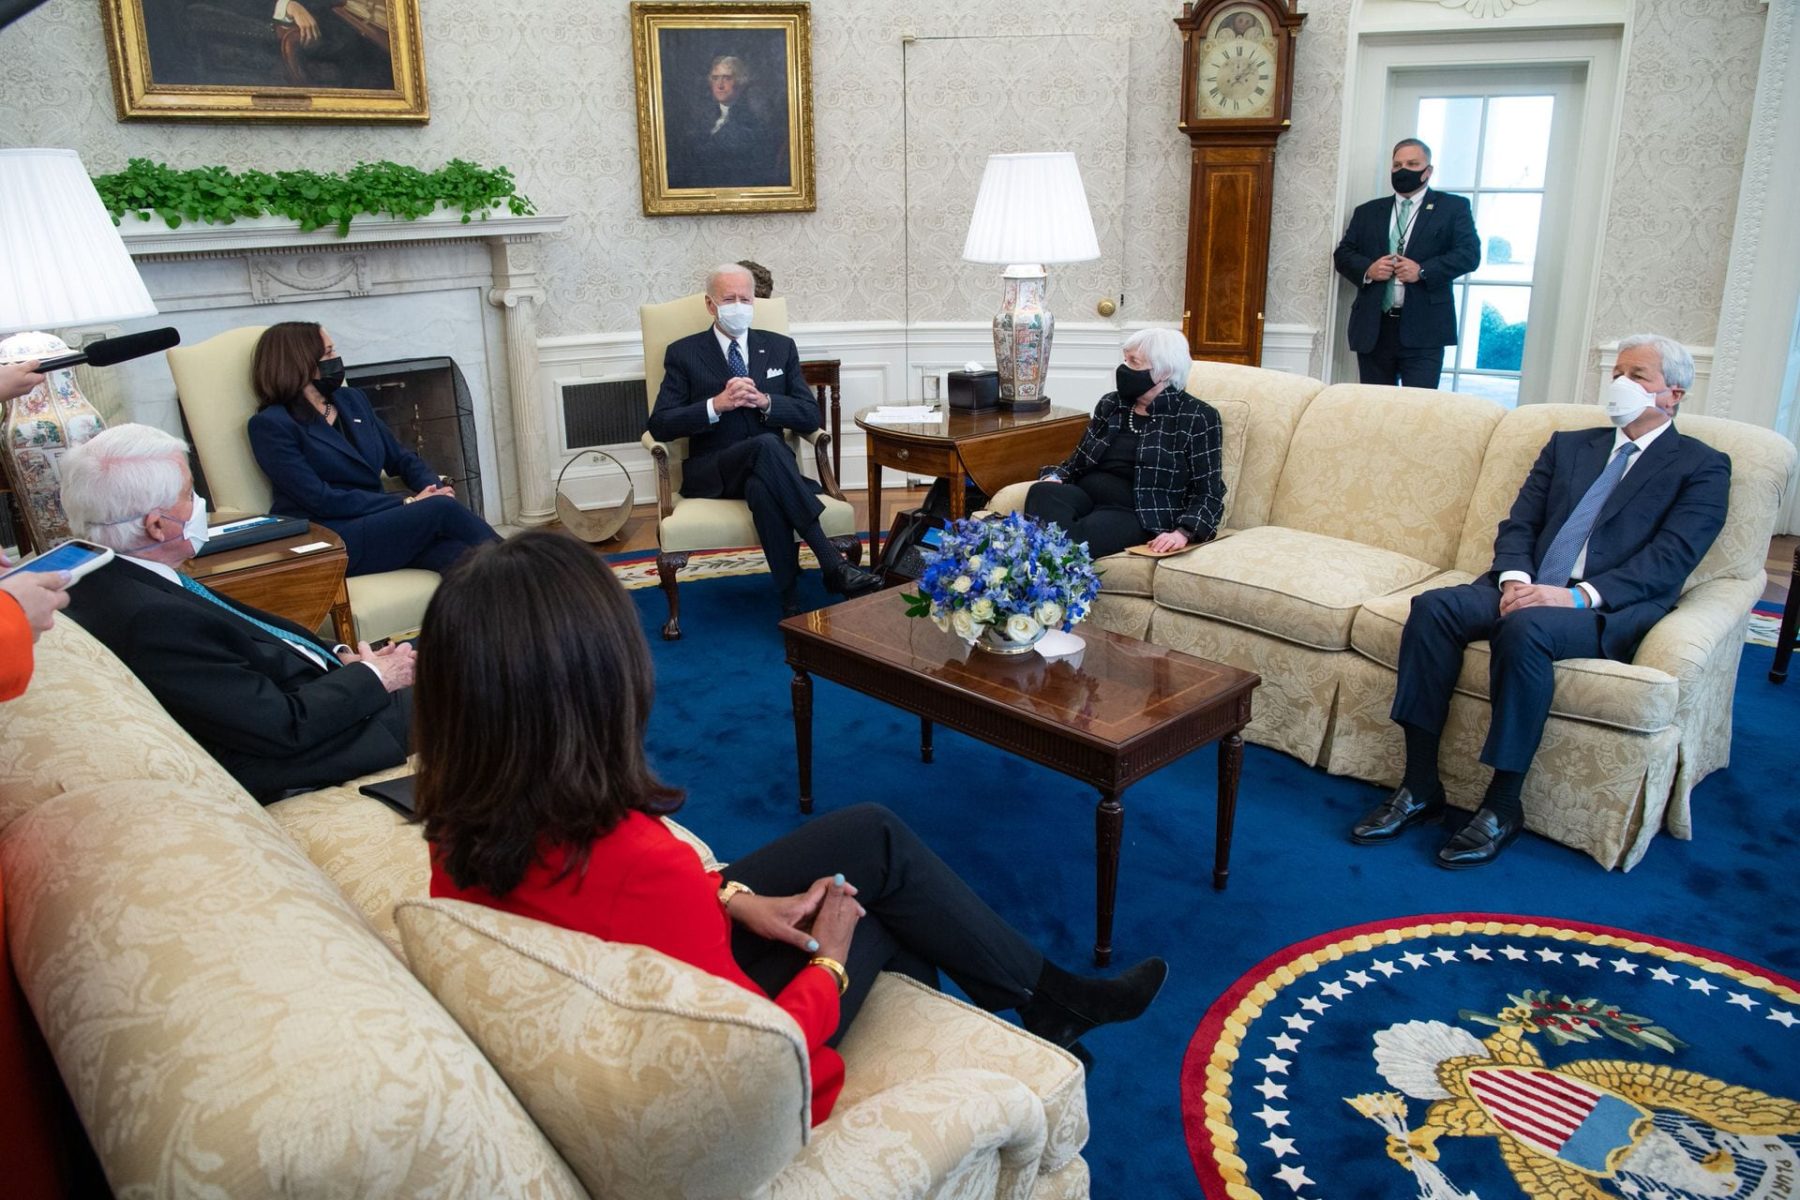 Biden and Harris in Oval Office